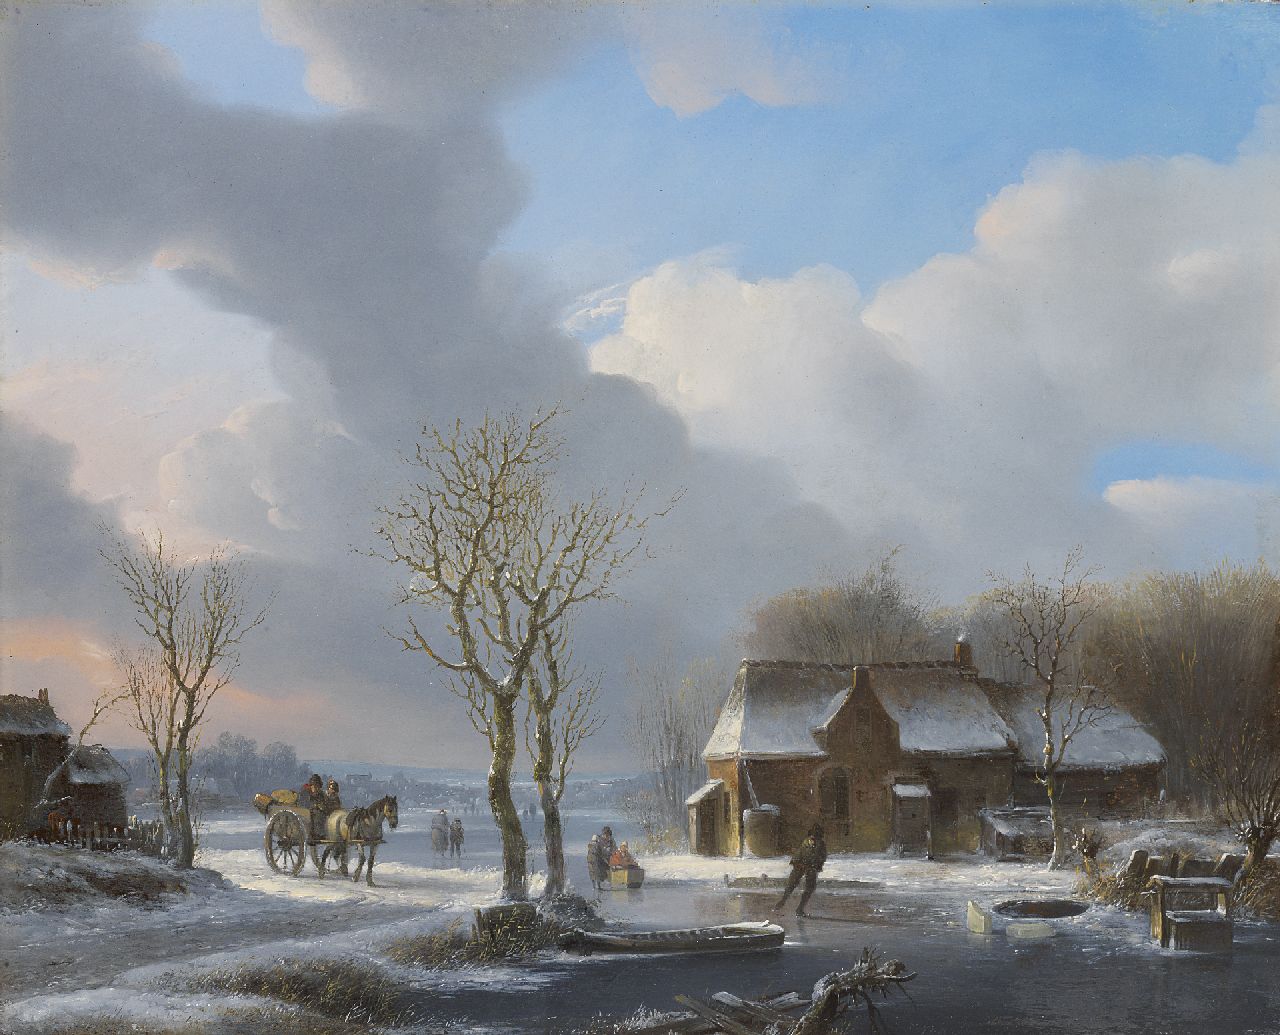 Stok J. van der | Jacobus van der Stok, A cold winter day, oil on panel 35.1 x 43.3 cm